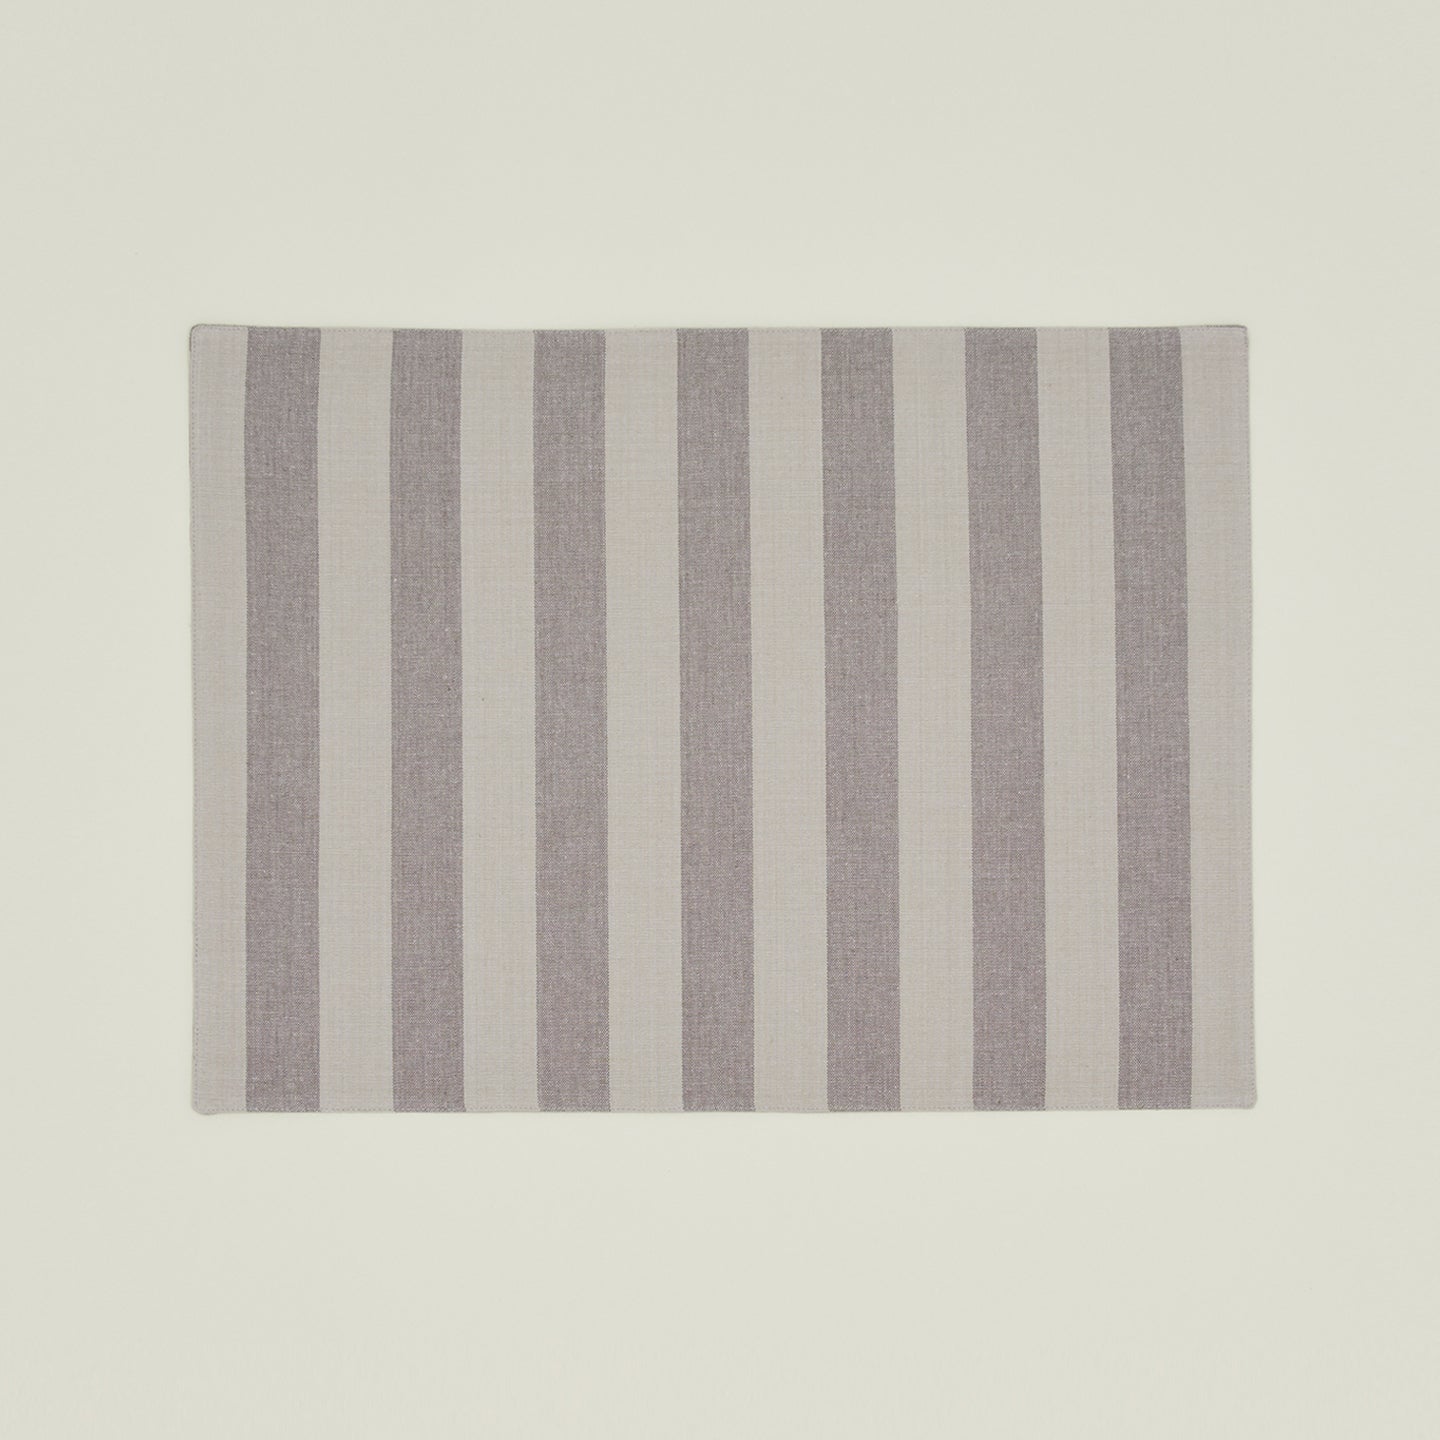 Essential Striped Placemat, Set of 4 - Light Grey/Dark Grey